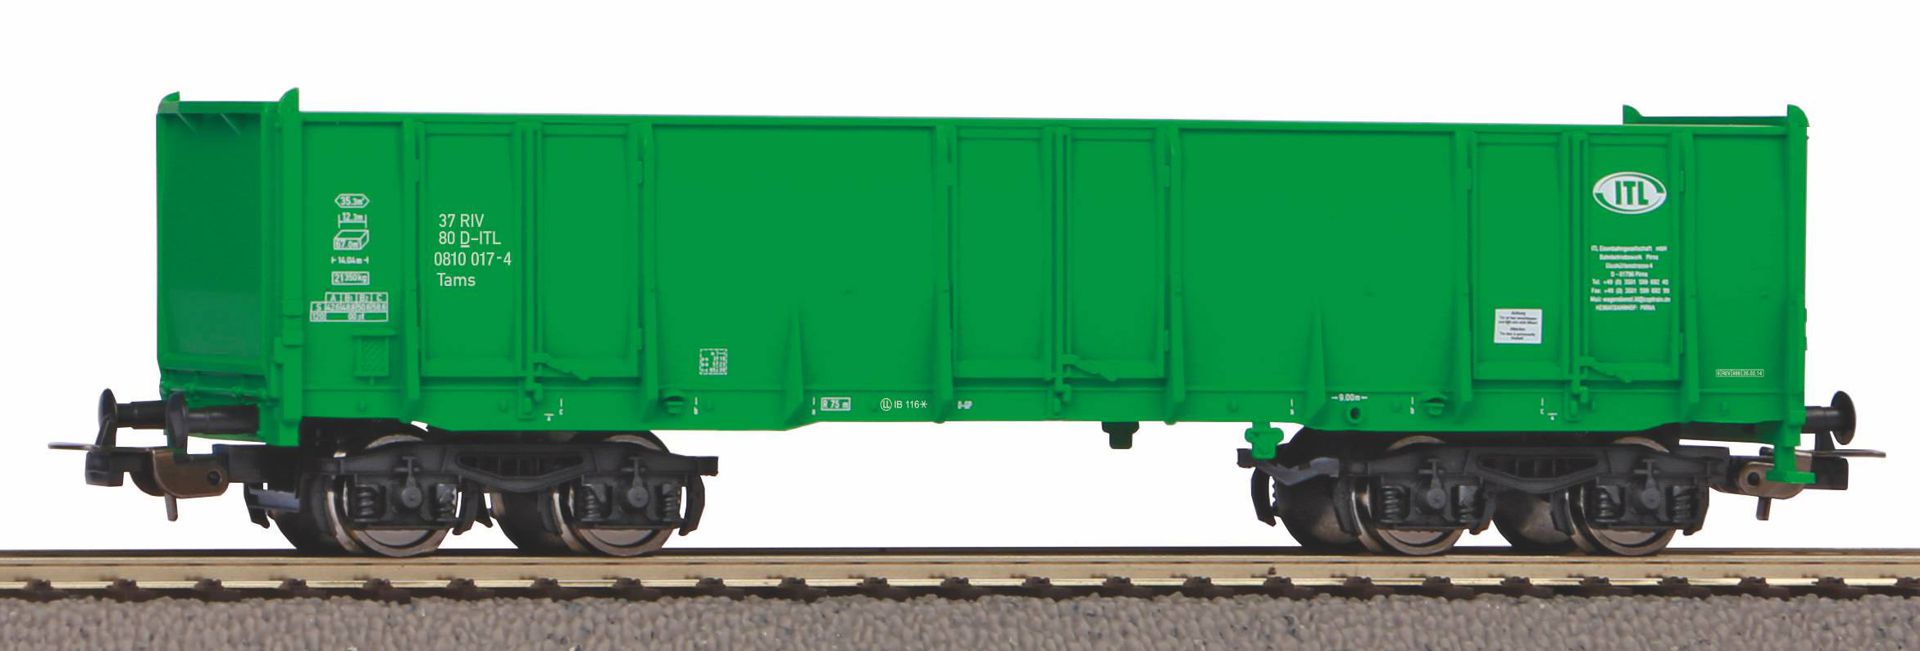 Piko 98546-C2 - Hochbordwagen Eaos , grün, ITL, Ep.VI, Betriebsnummer 2